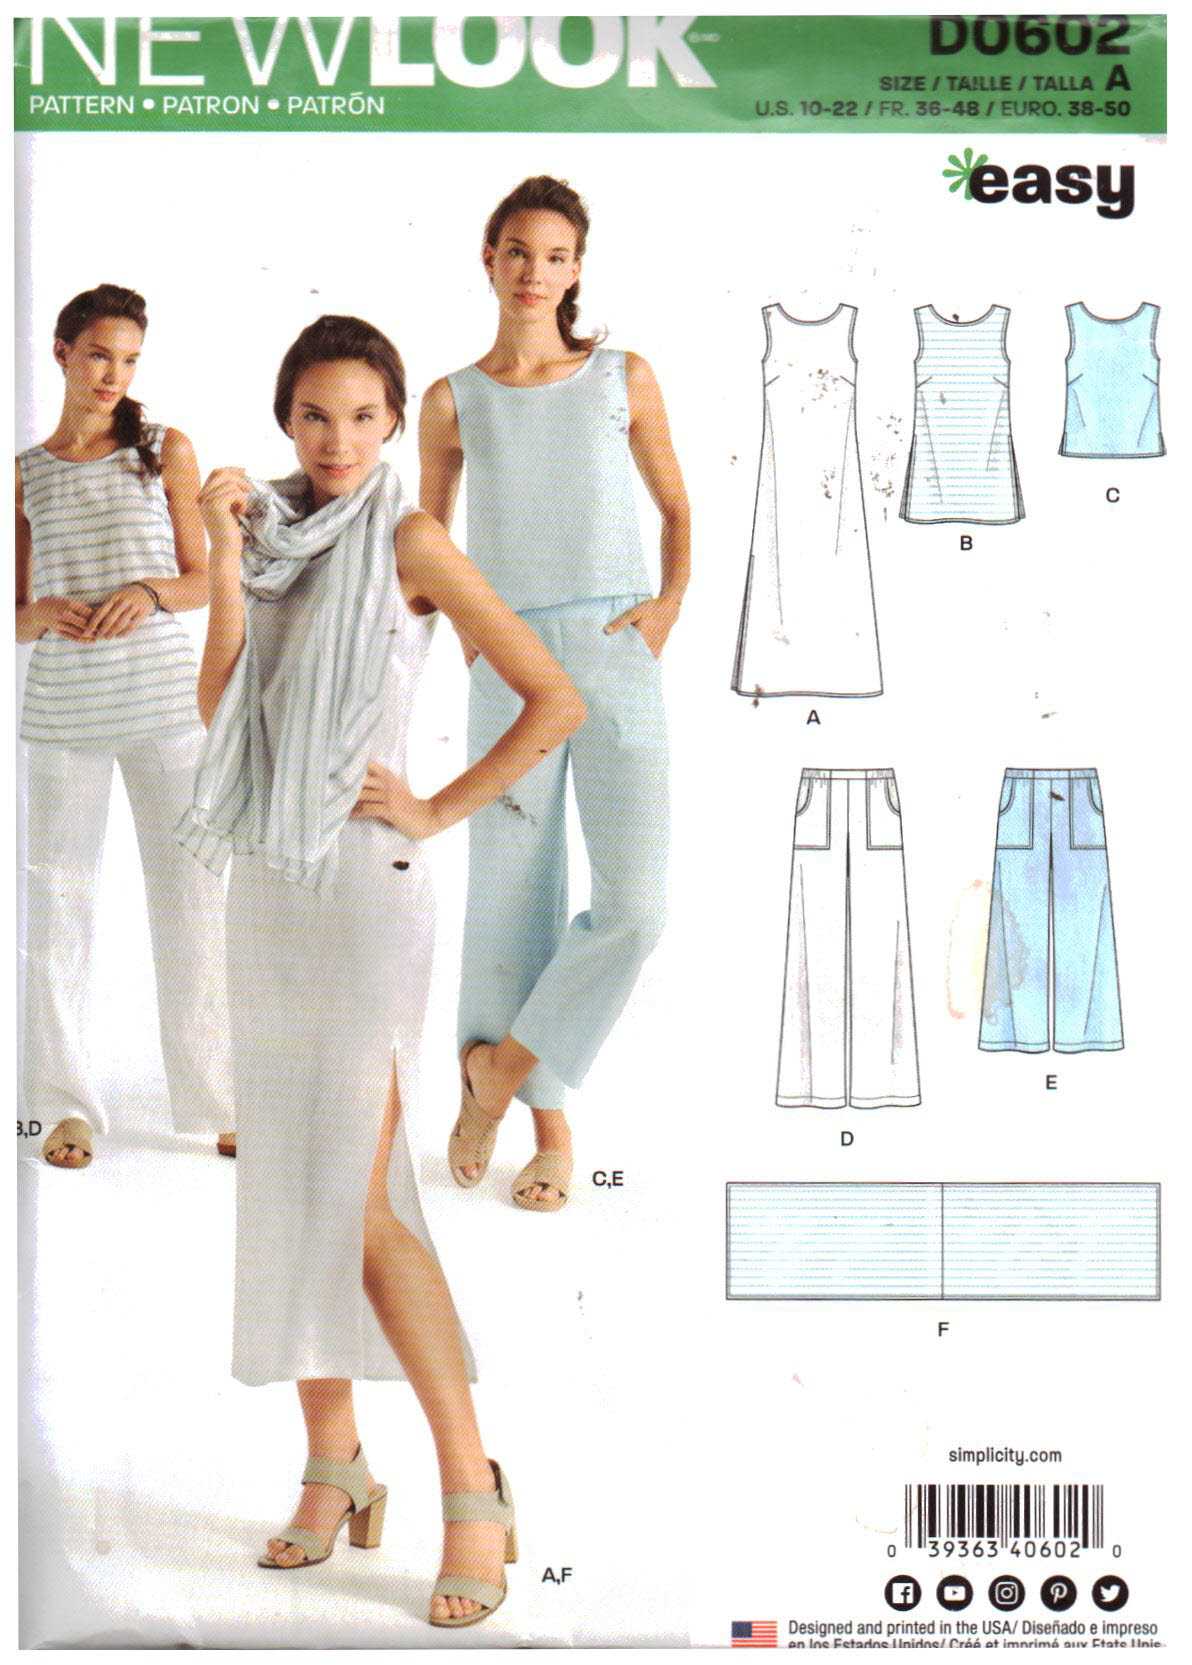 New Look D0602 Dress, Top, Pants Size: 10-22 Uncut Sewing Pattern